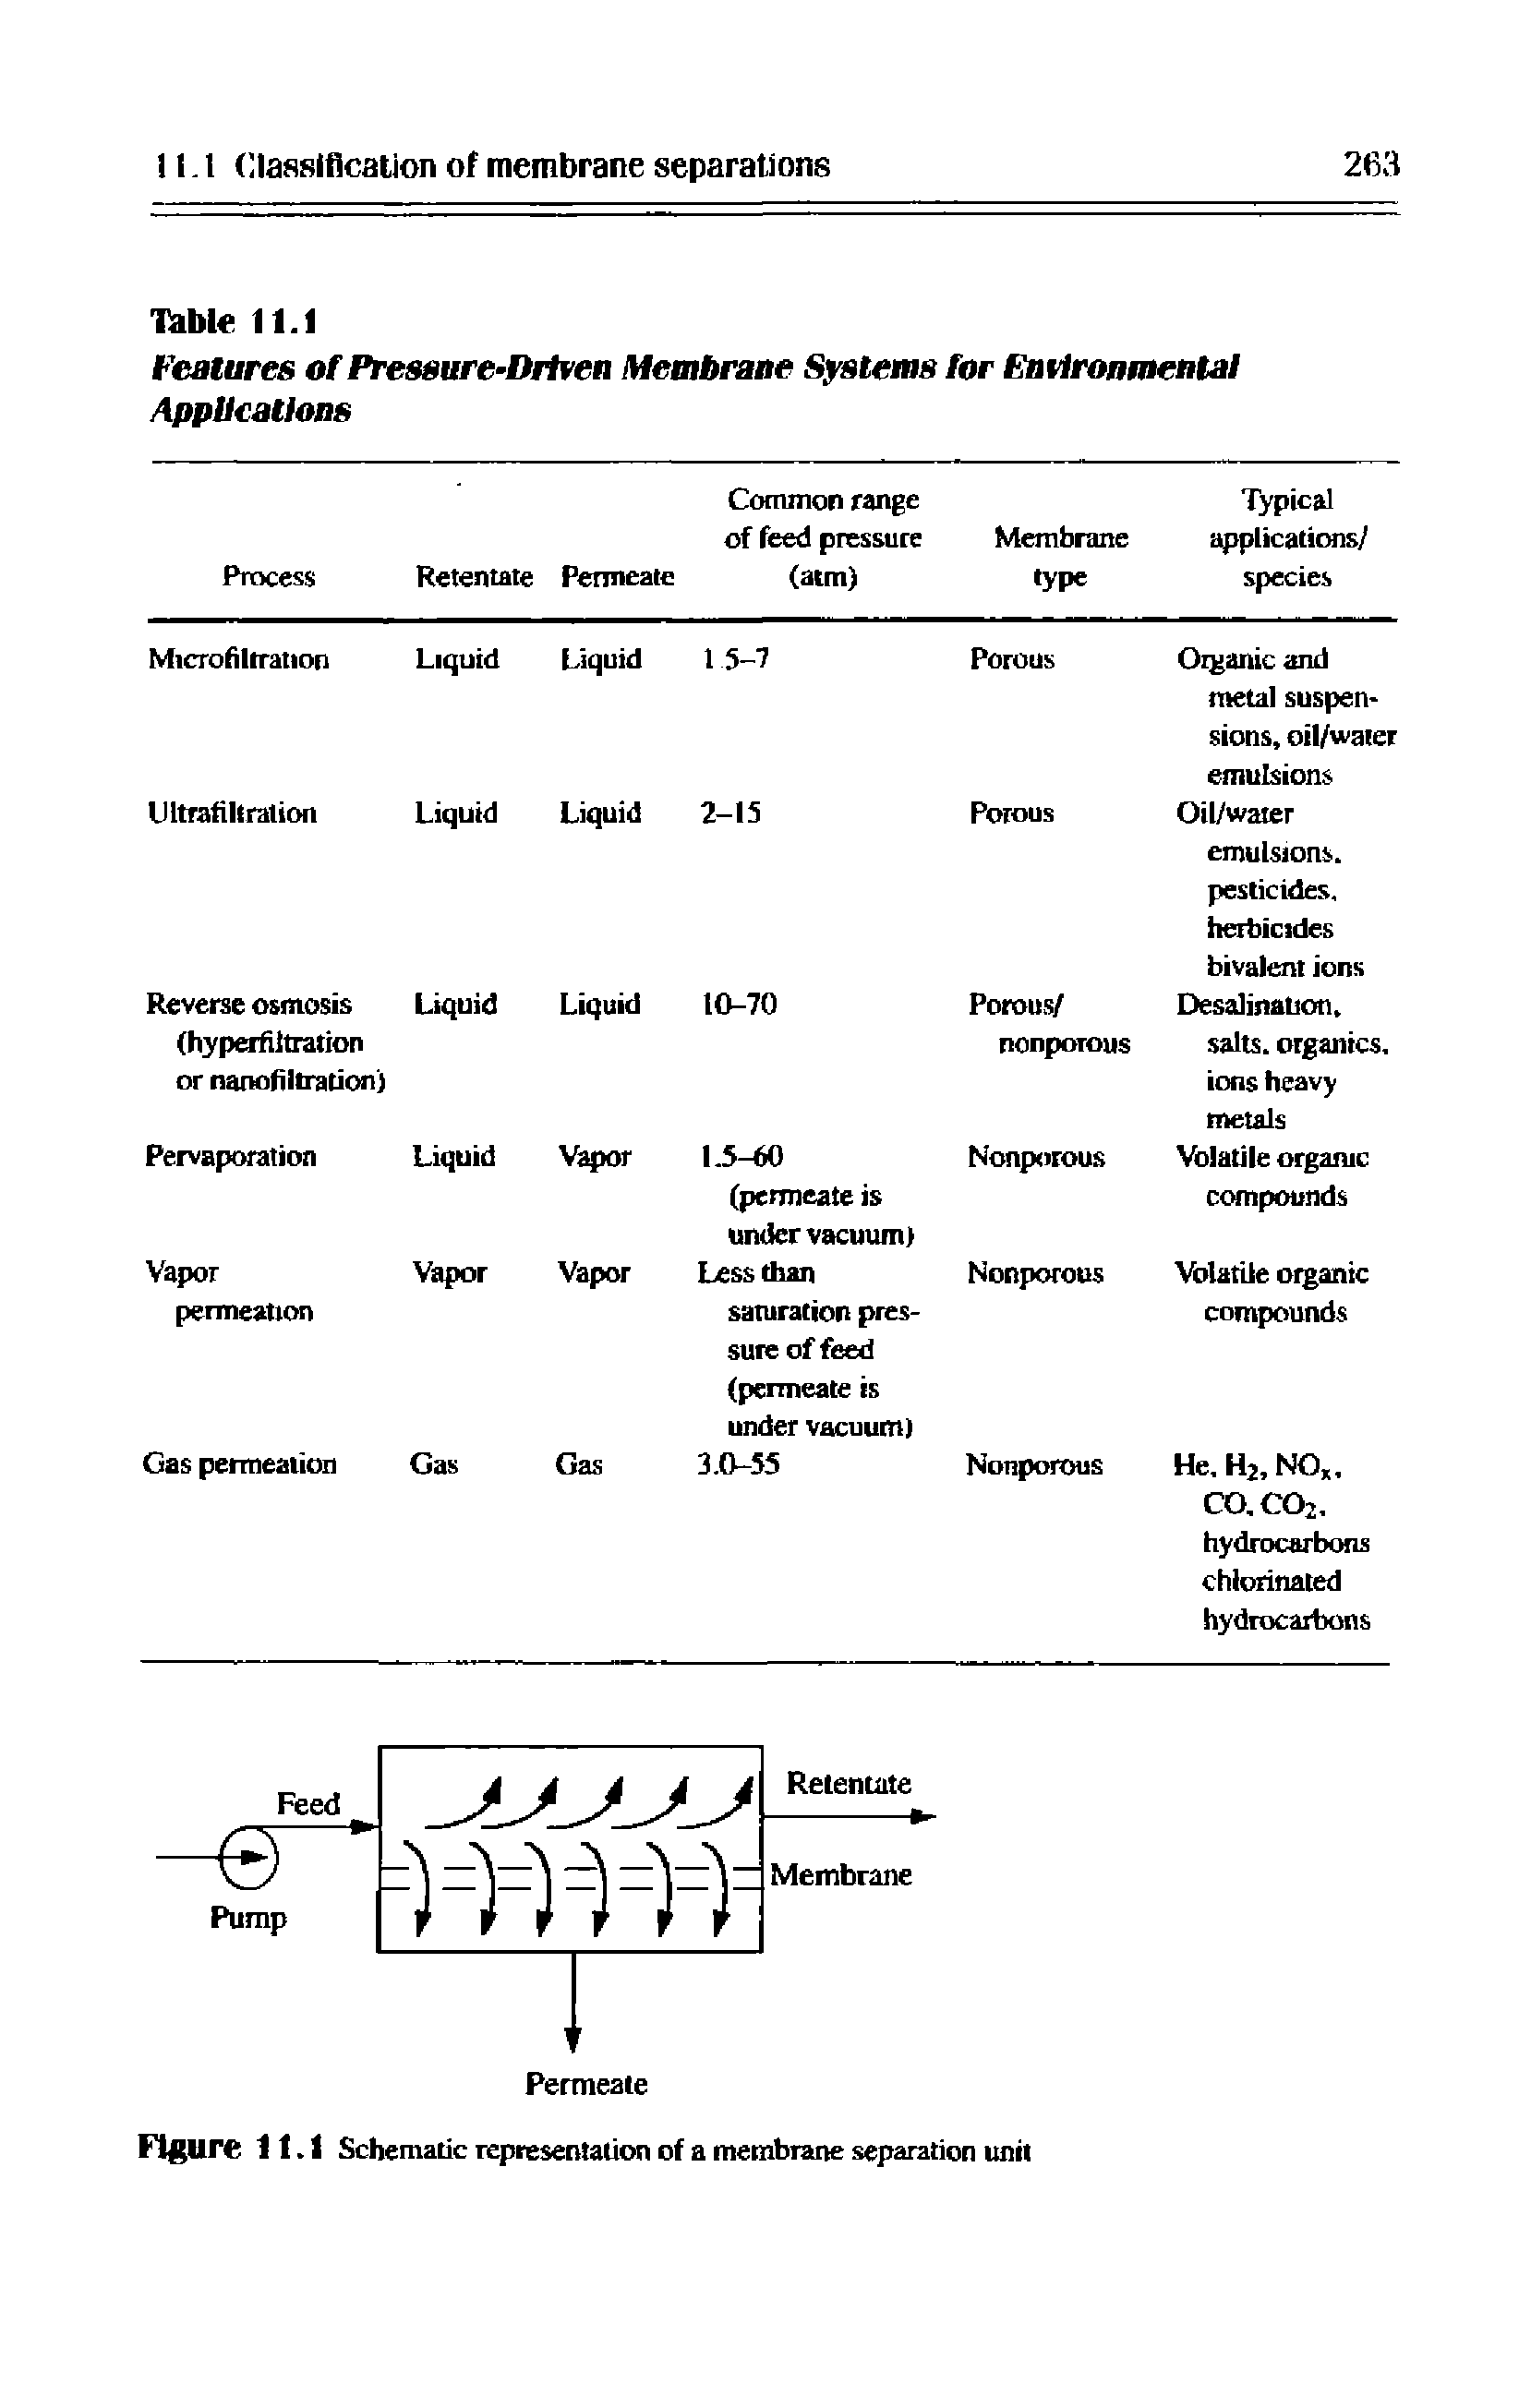 Figure 11.1 Schematic representation of a membrane separation unit...